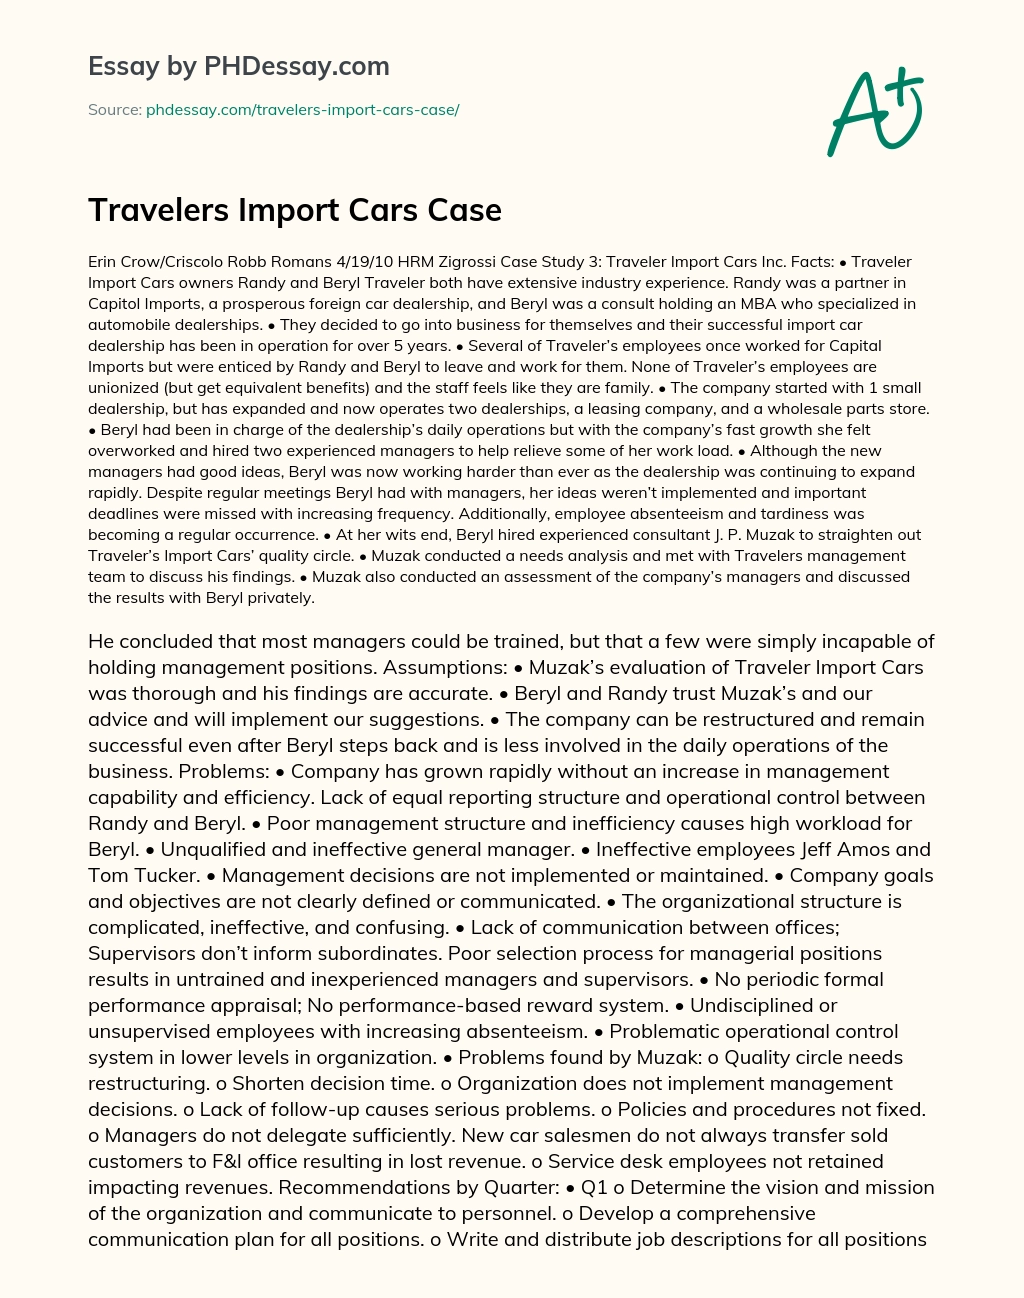 Travelers Import Cars Case essay